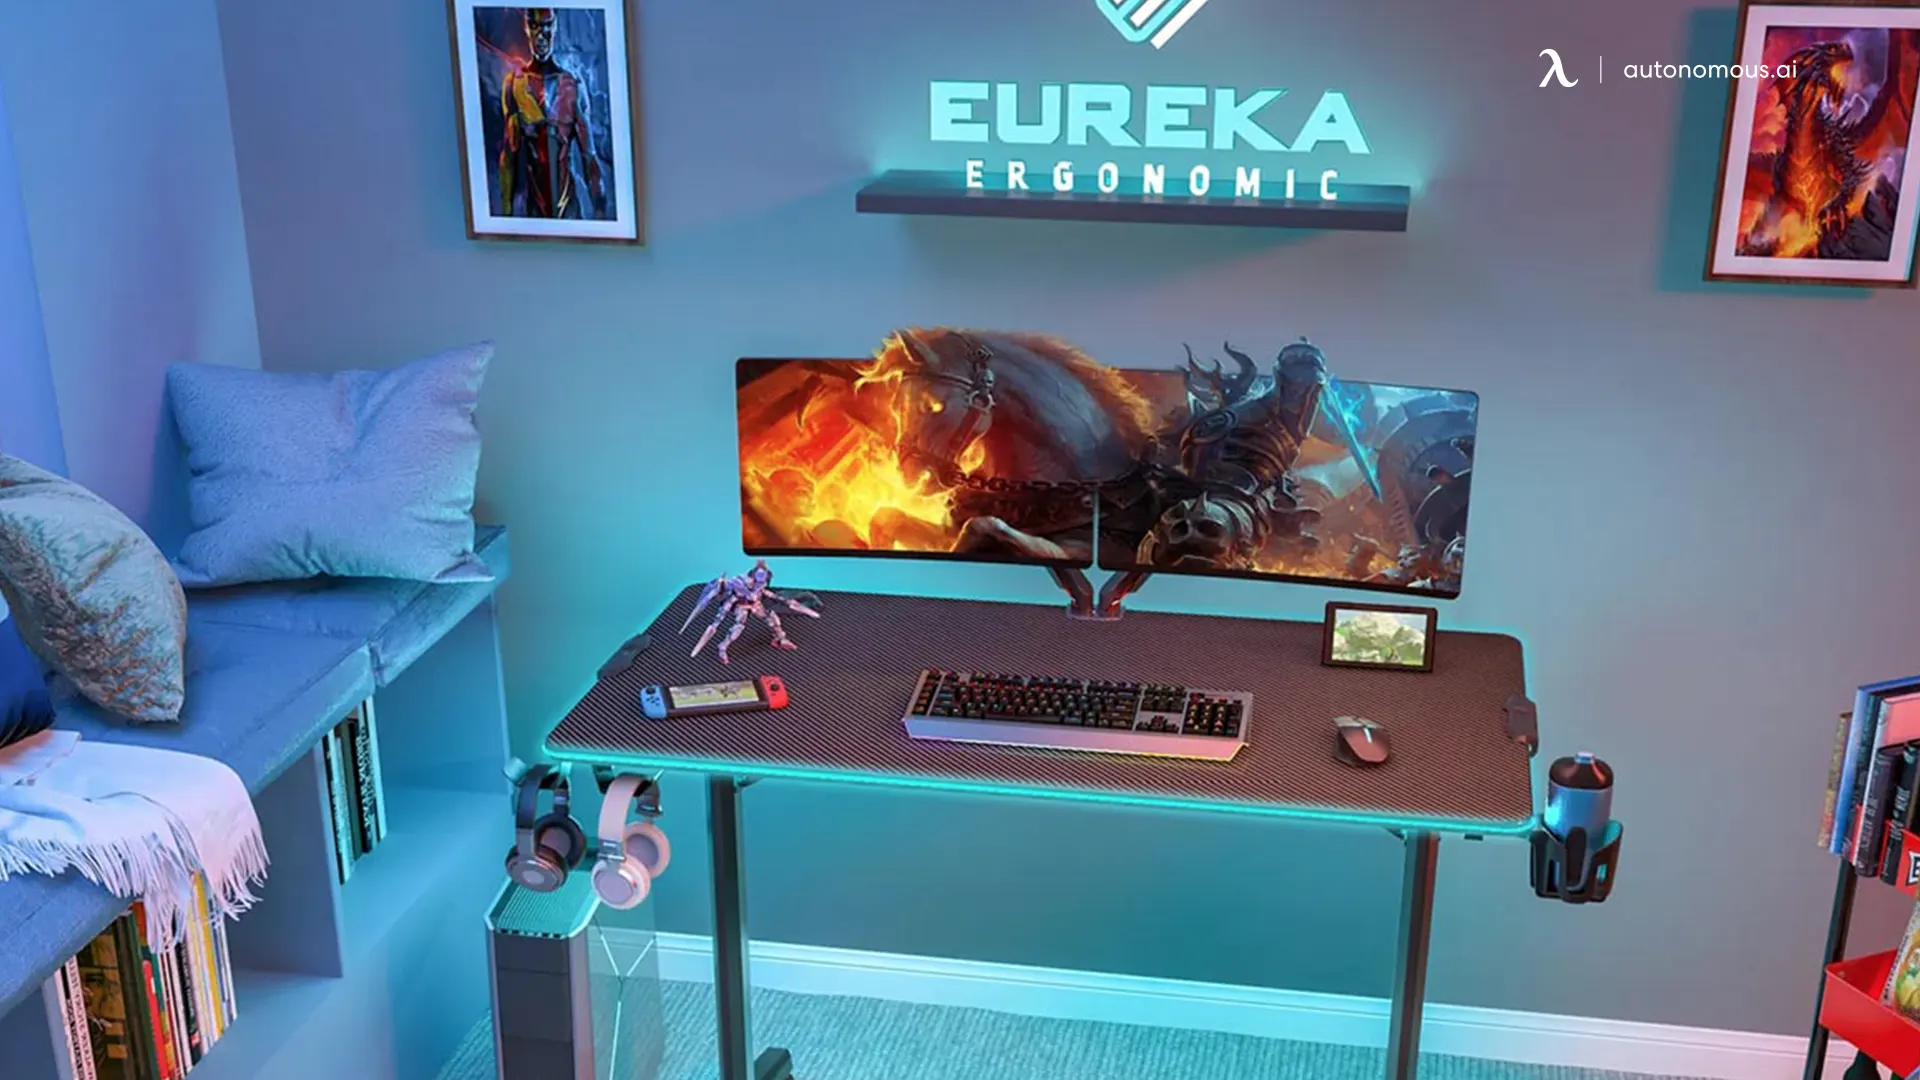 Eureka Ergonomic - where to buy a desk